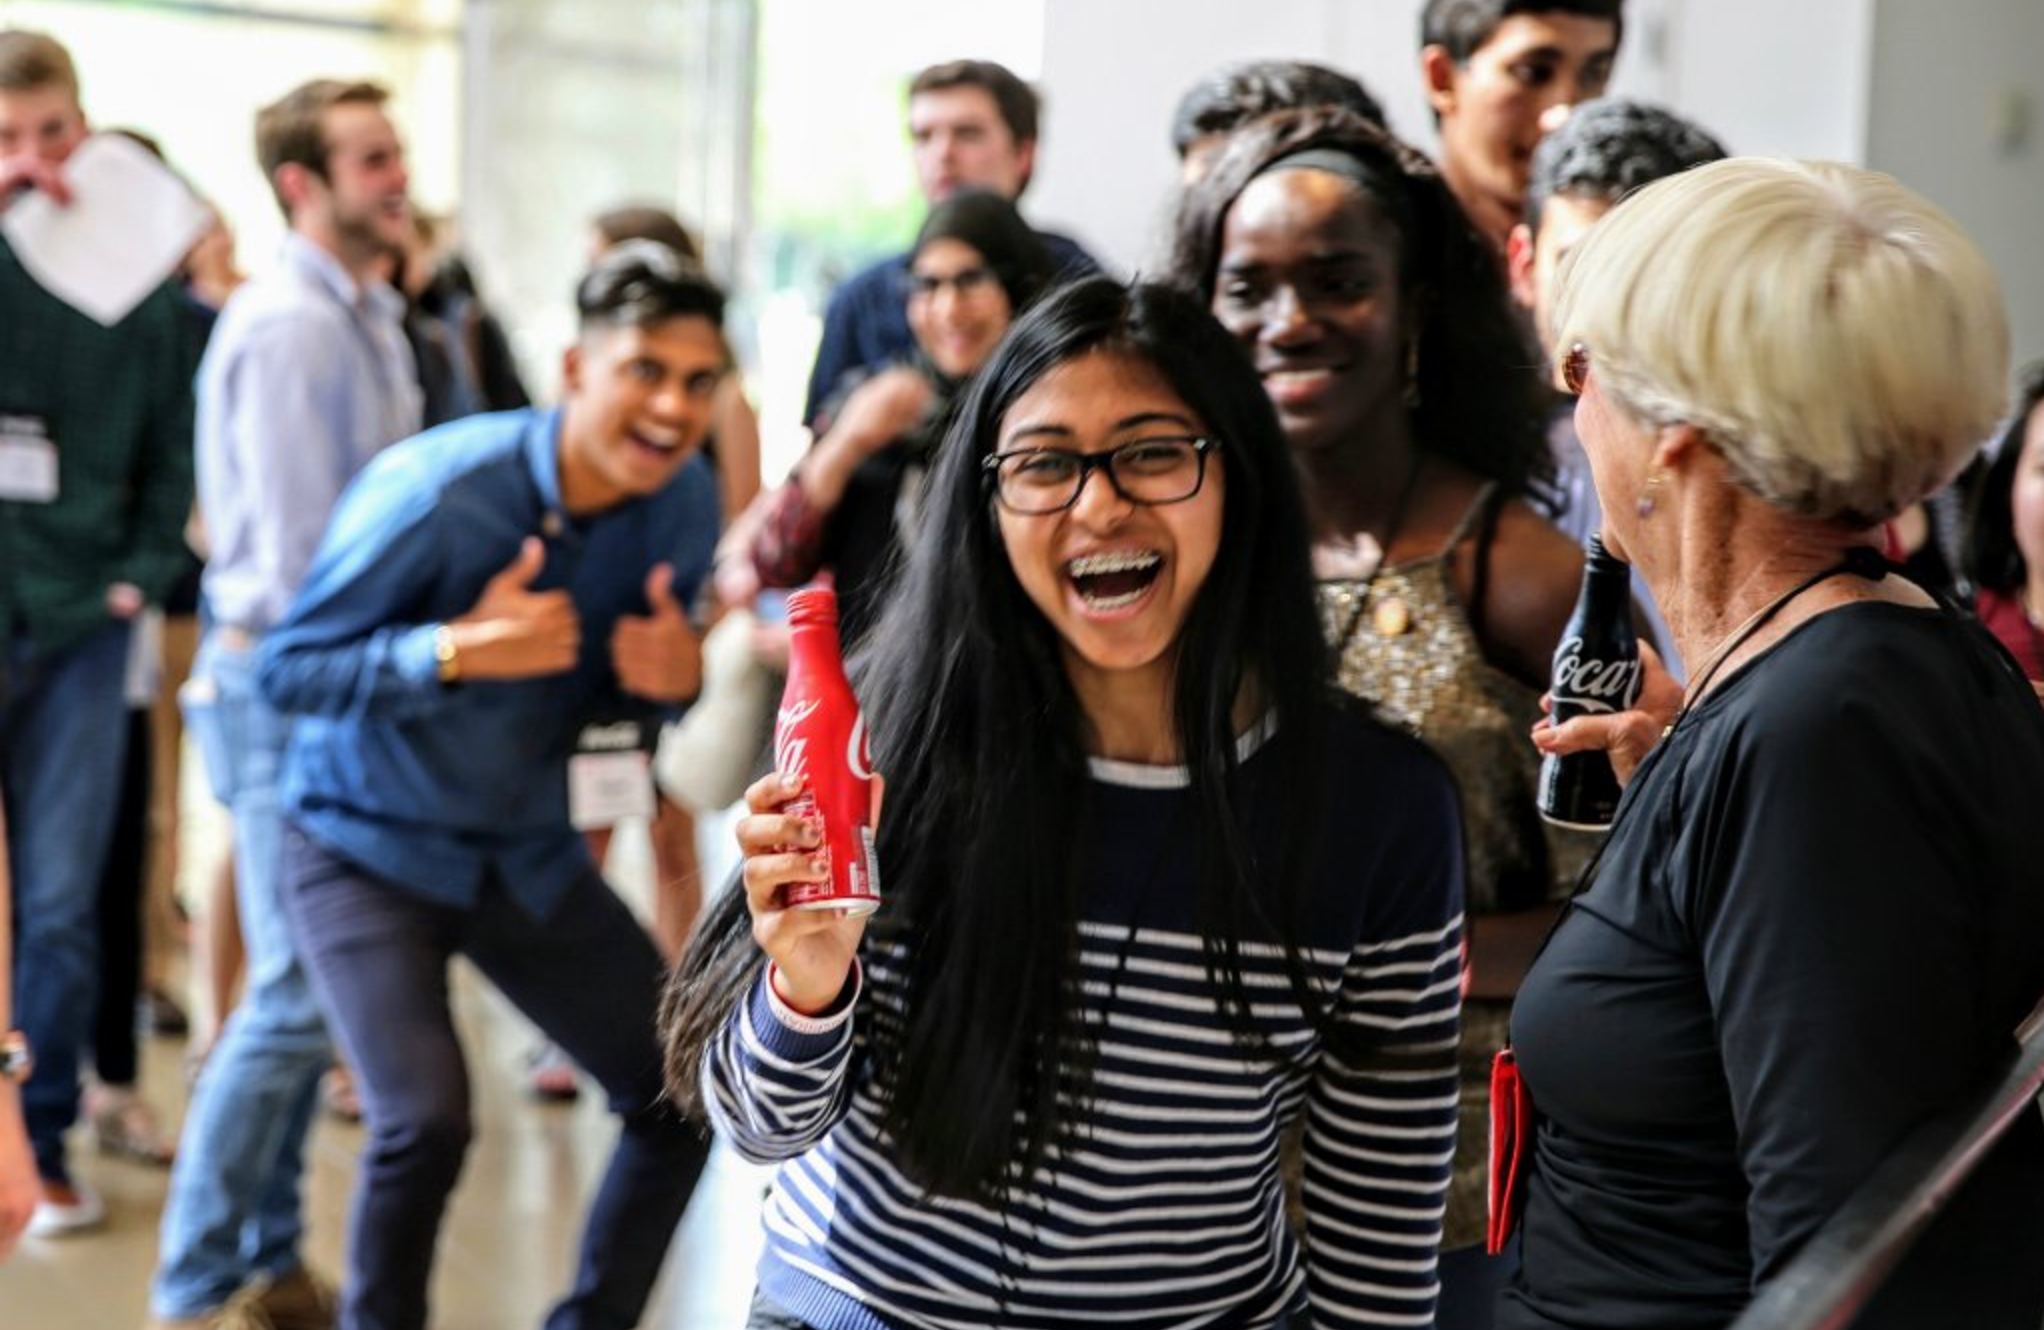 Coca-Cola Scholars Program Scholarship 2019 for U.S. Students (Up to $20,000)